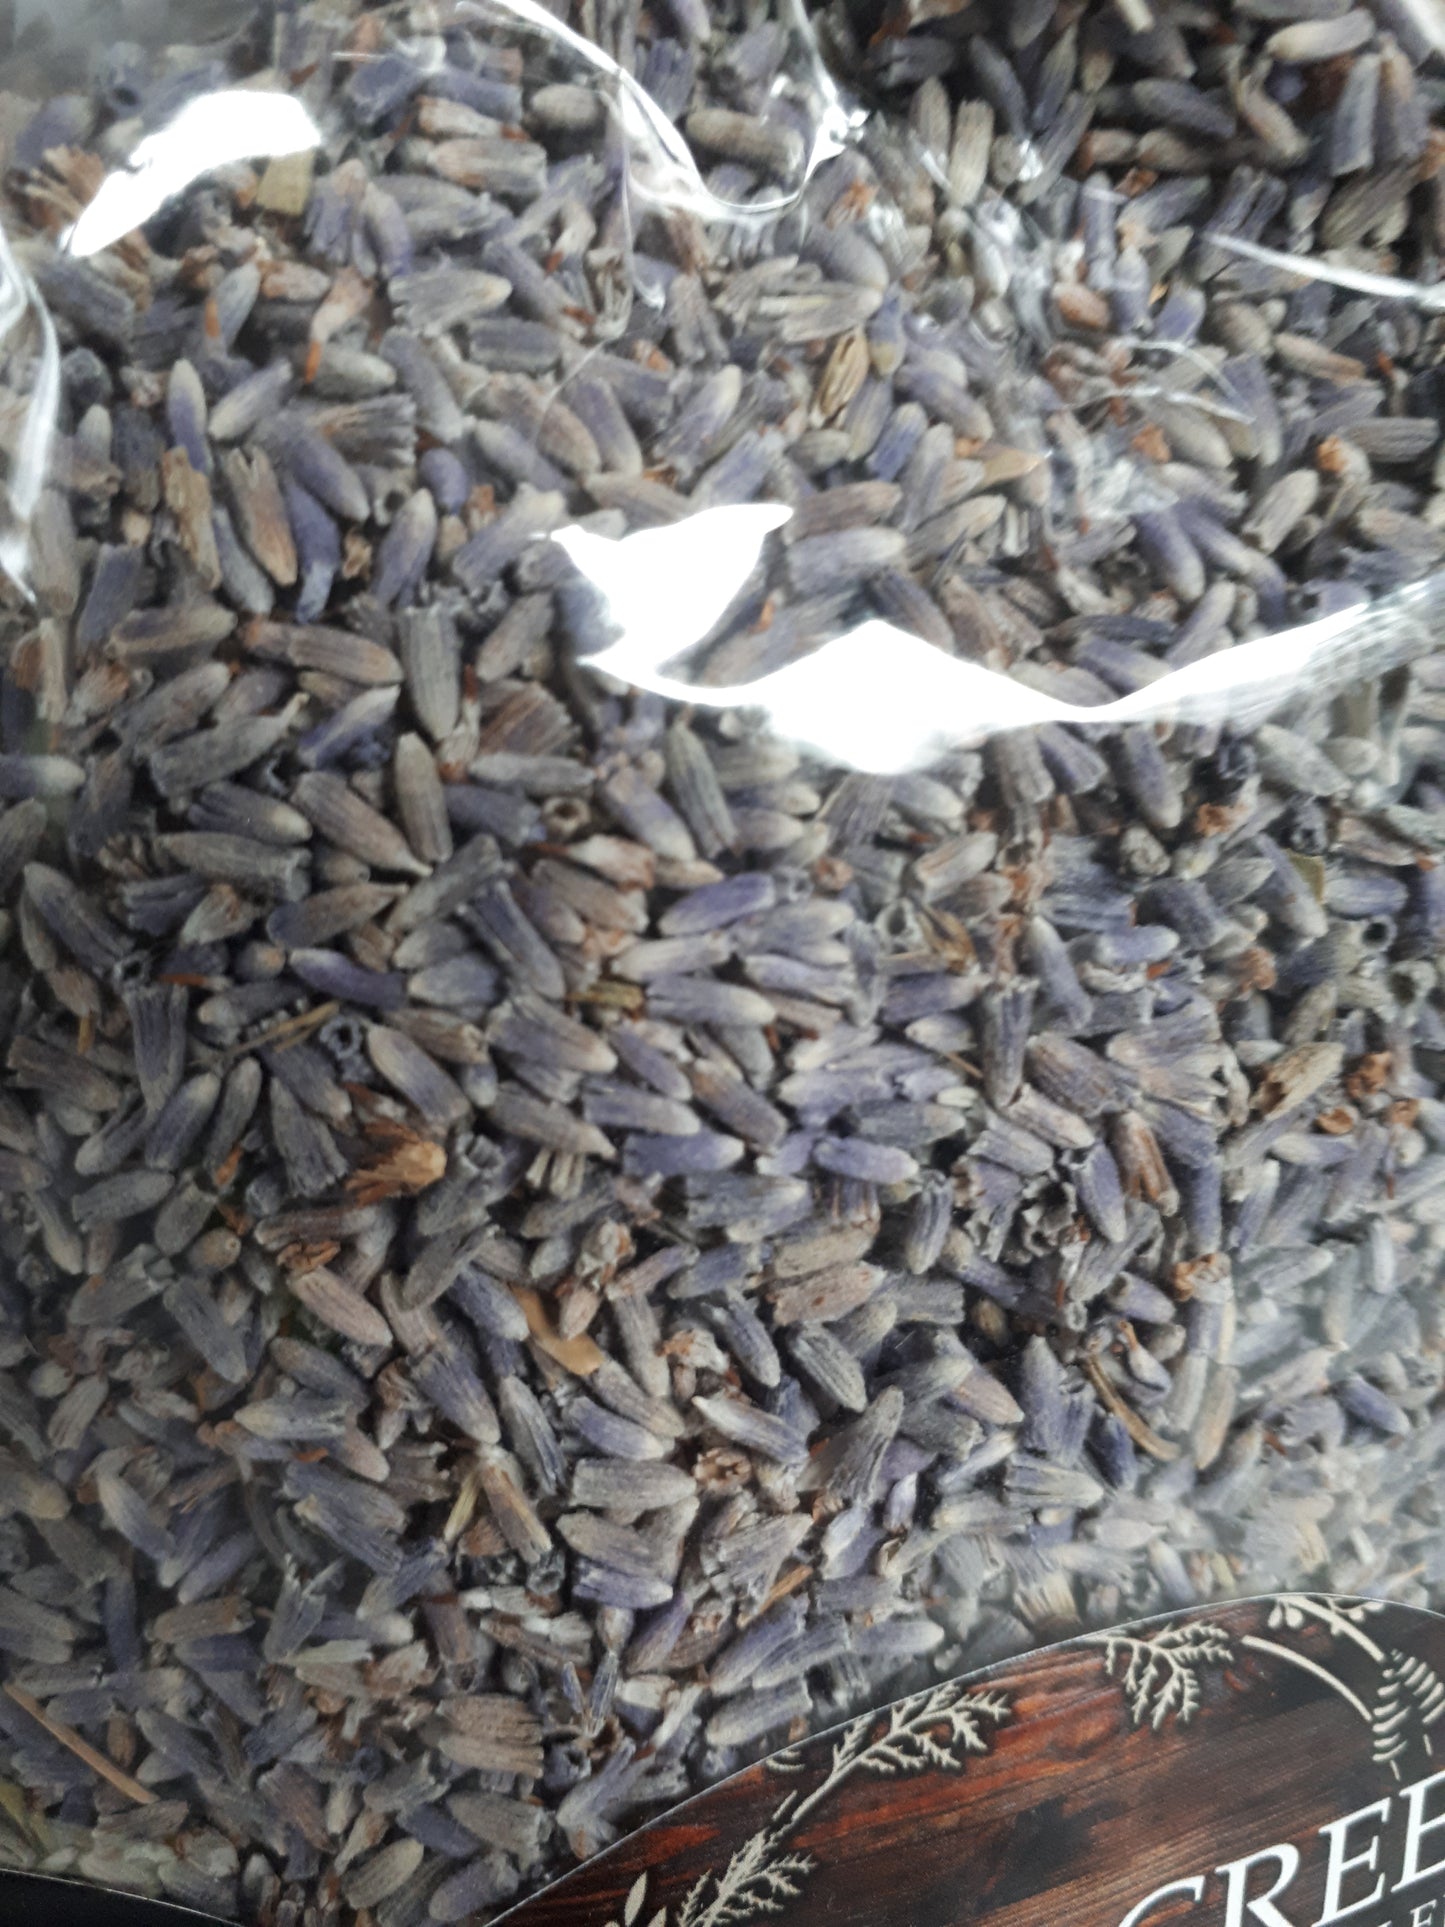 Lavender Seeds - Cedar-Creek-Muskoka